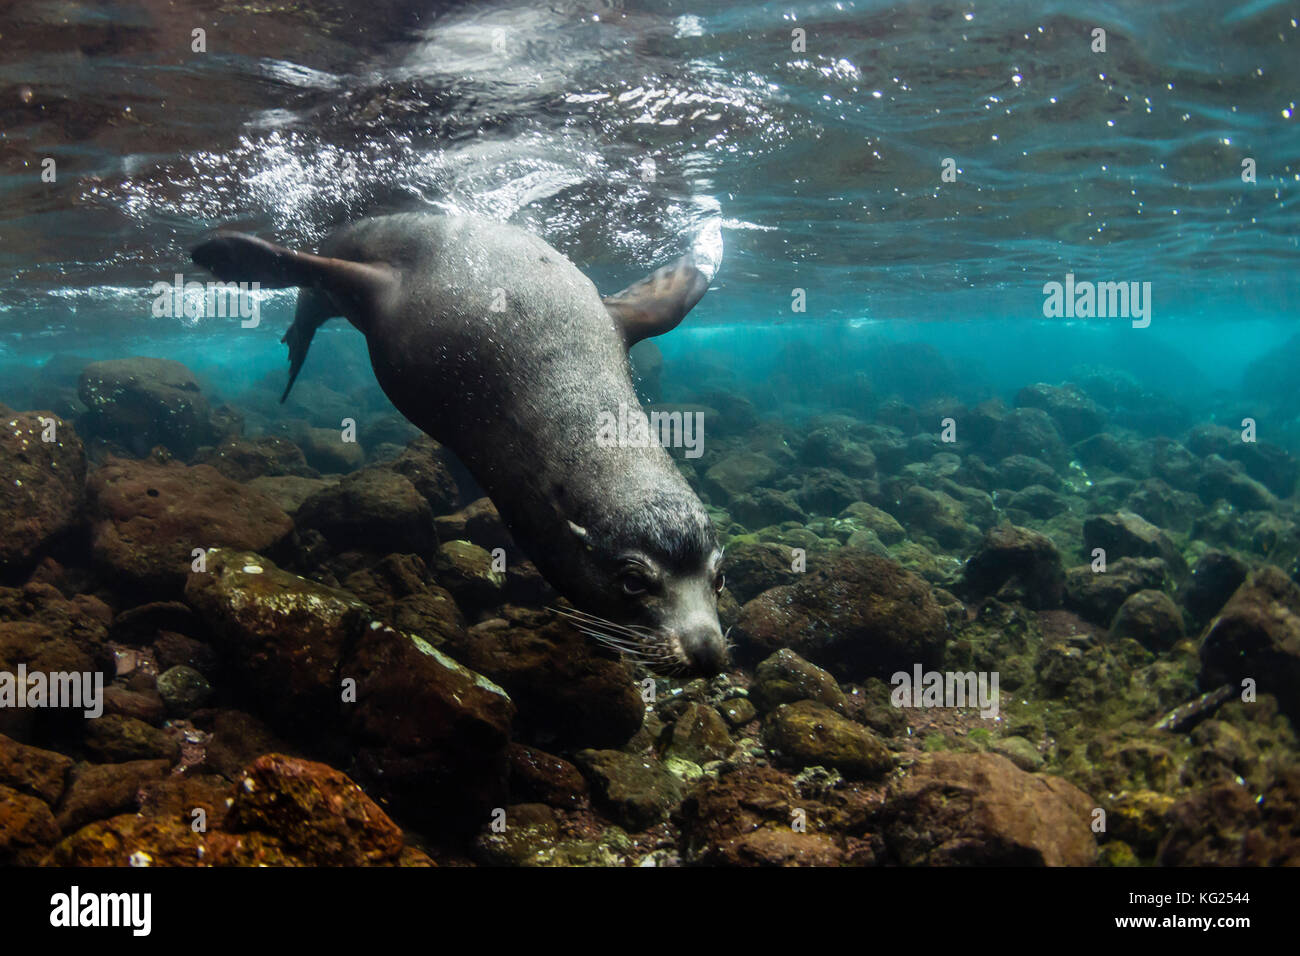 Bull galapagos Sea Lion (zalophus wollebaeki) sott'acqua di isola di Santiago, Galapagos, ecuador, SUD AMERICA Foto Stock